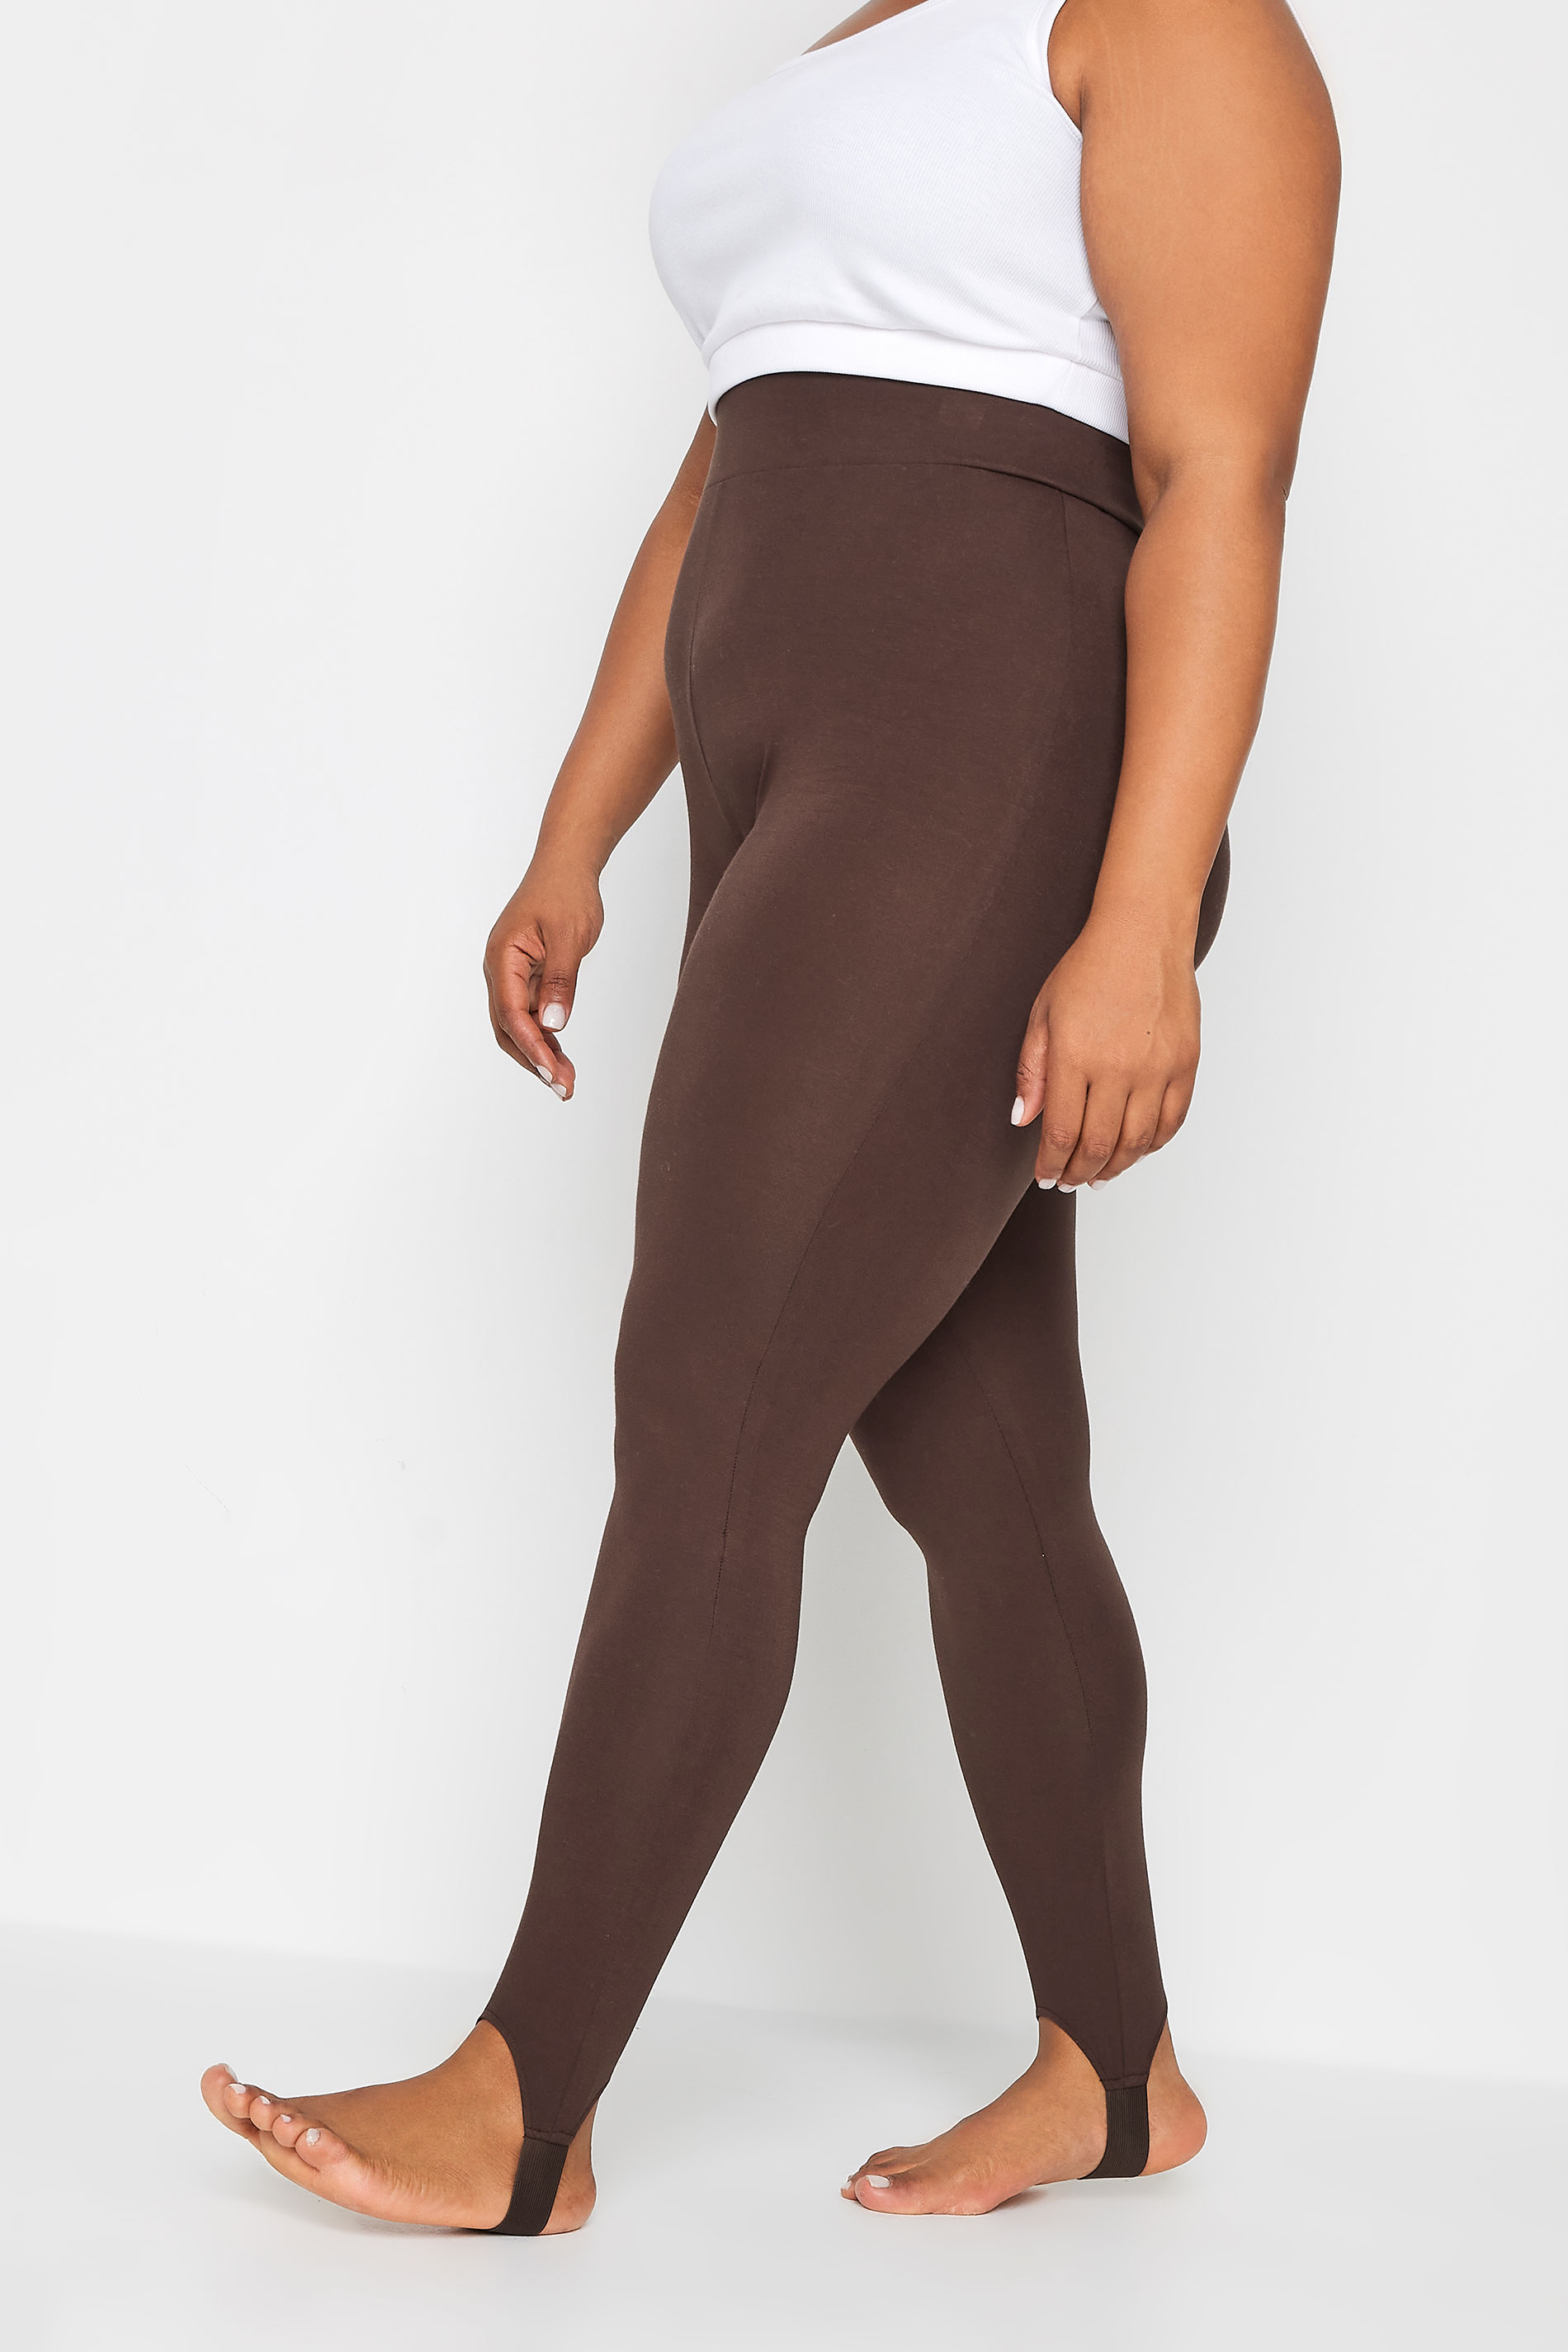 60 Bulk Sofra Ladies Polyester Leggings Plus Size Brown - at 